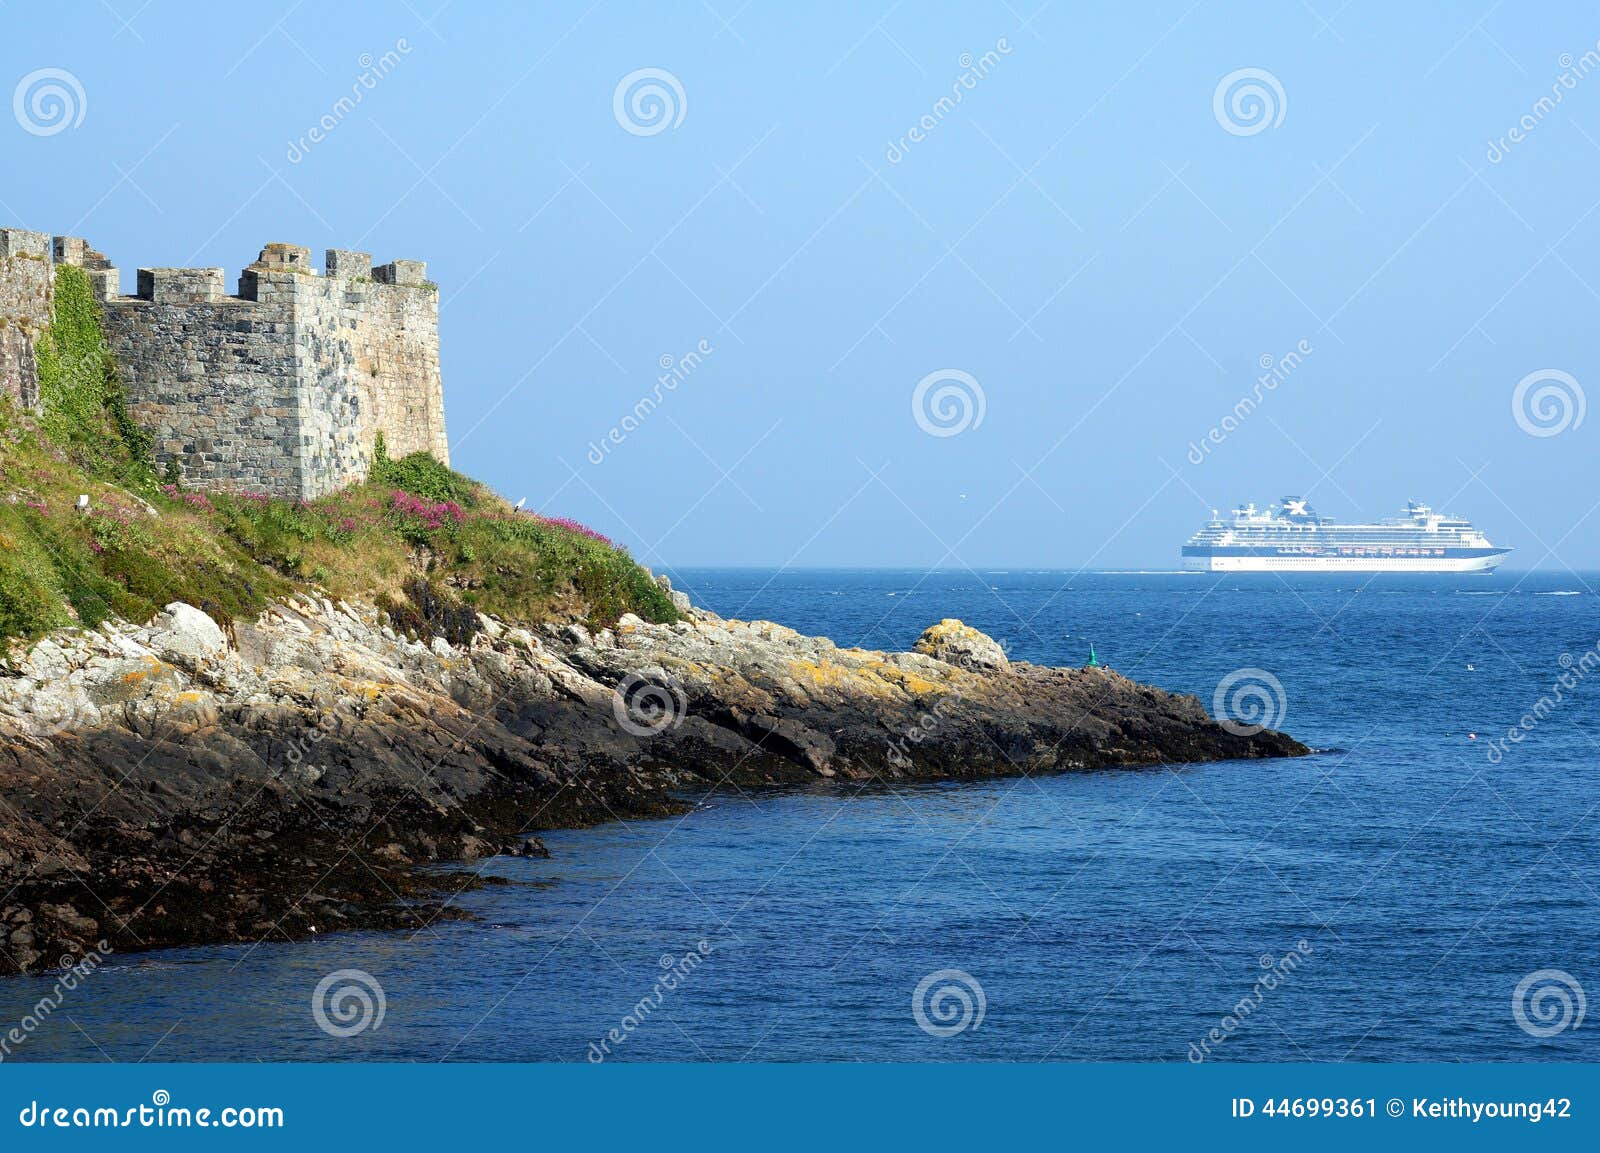 guernsey castle cornet cruise liner departing